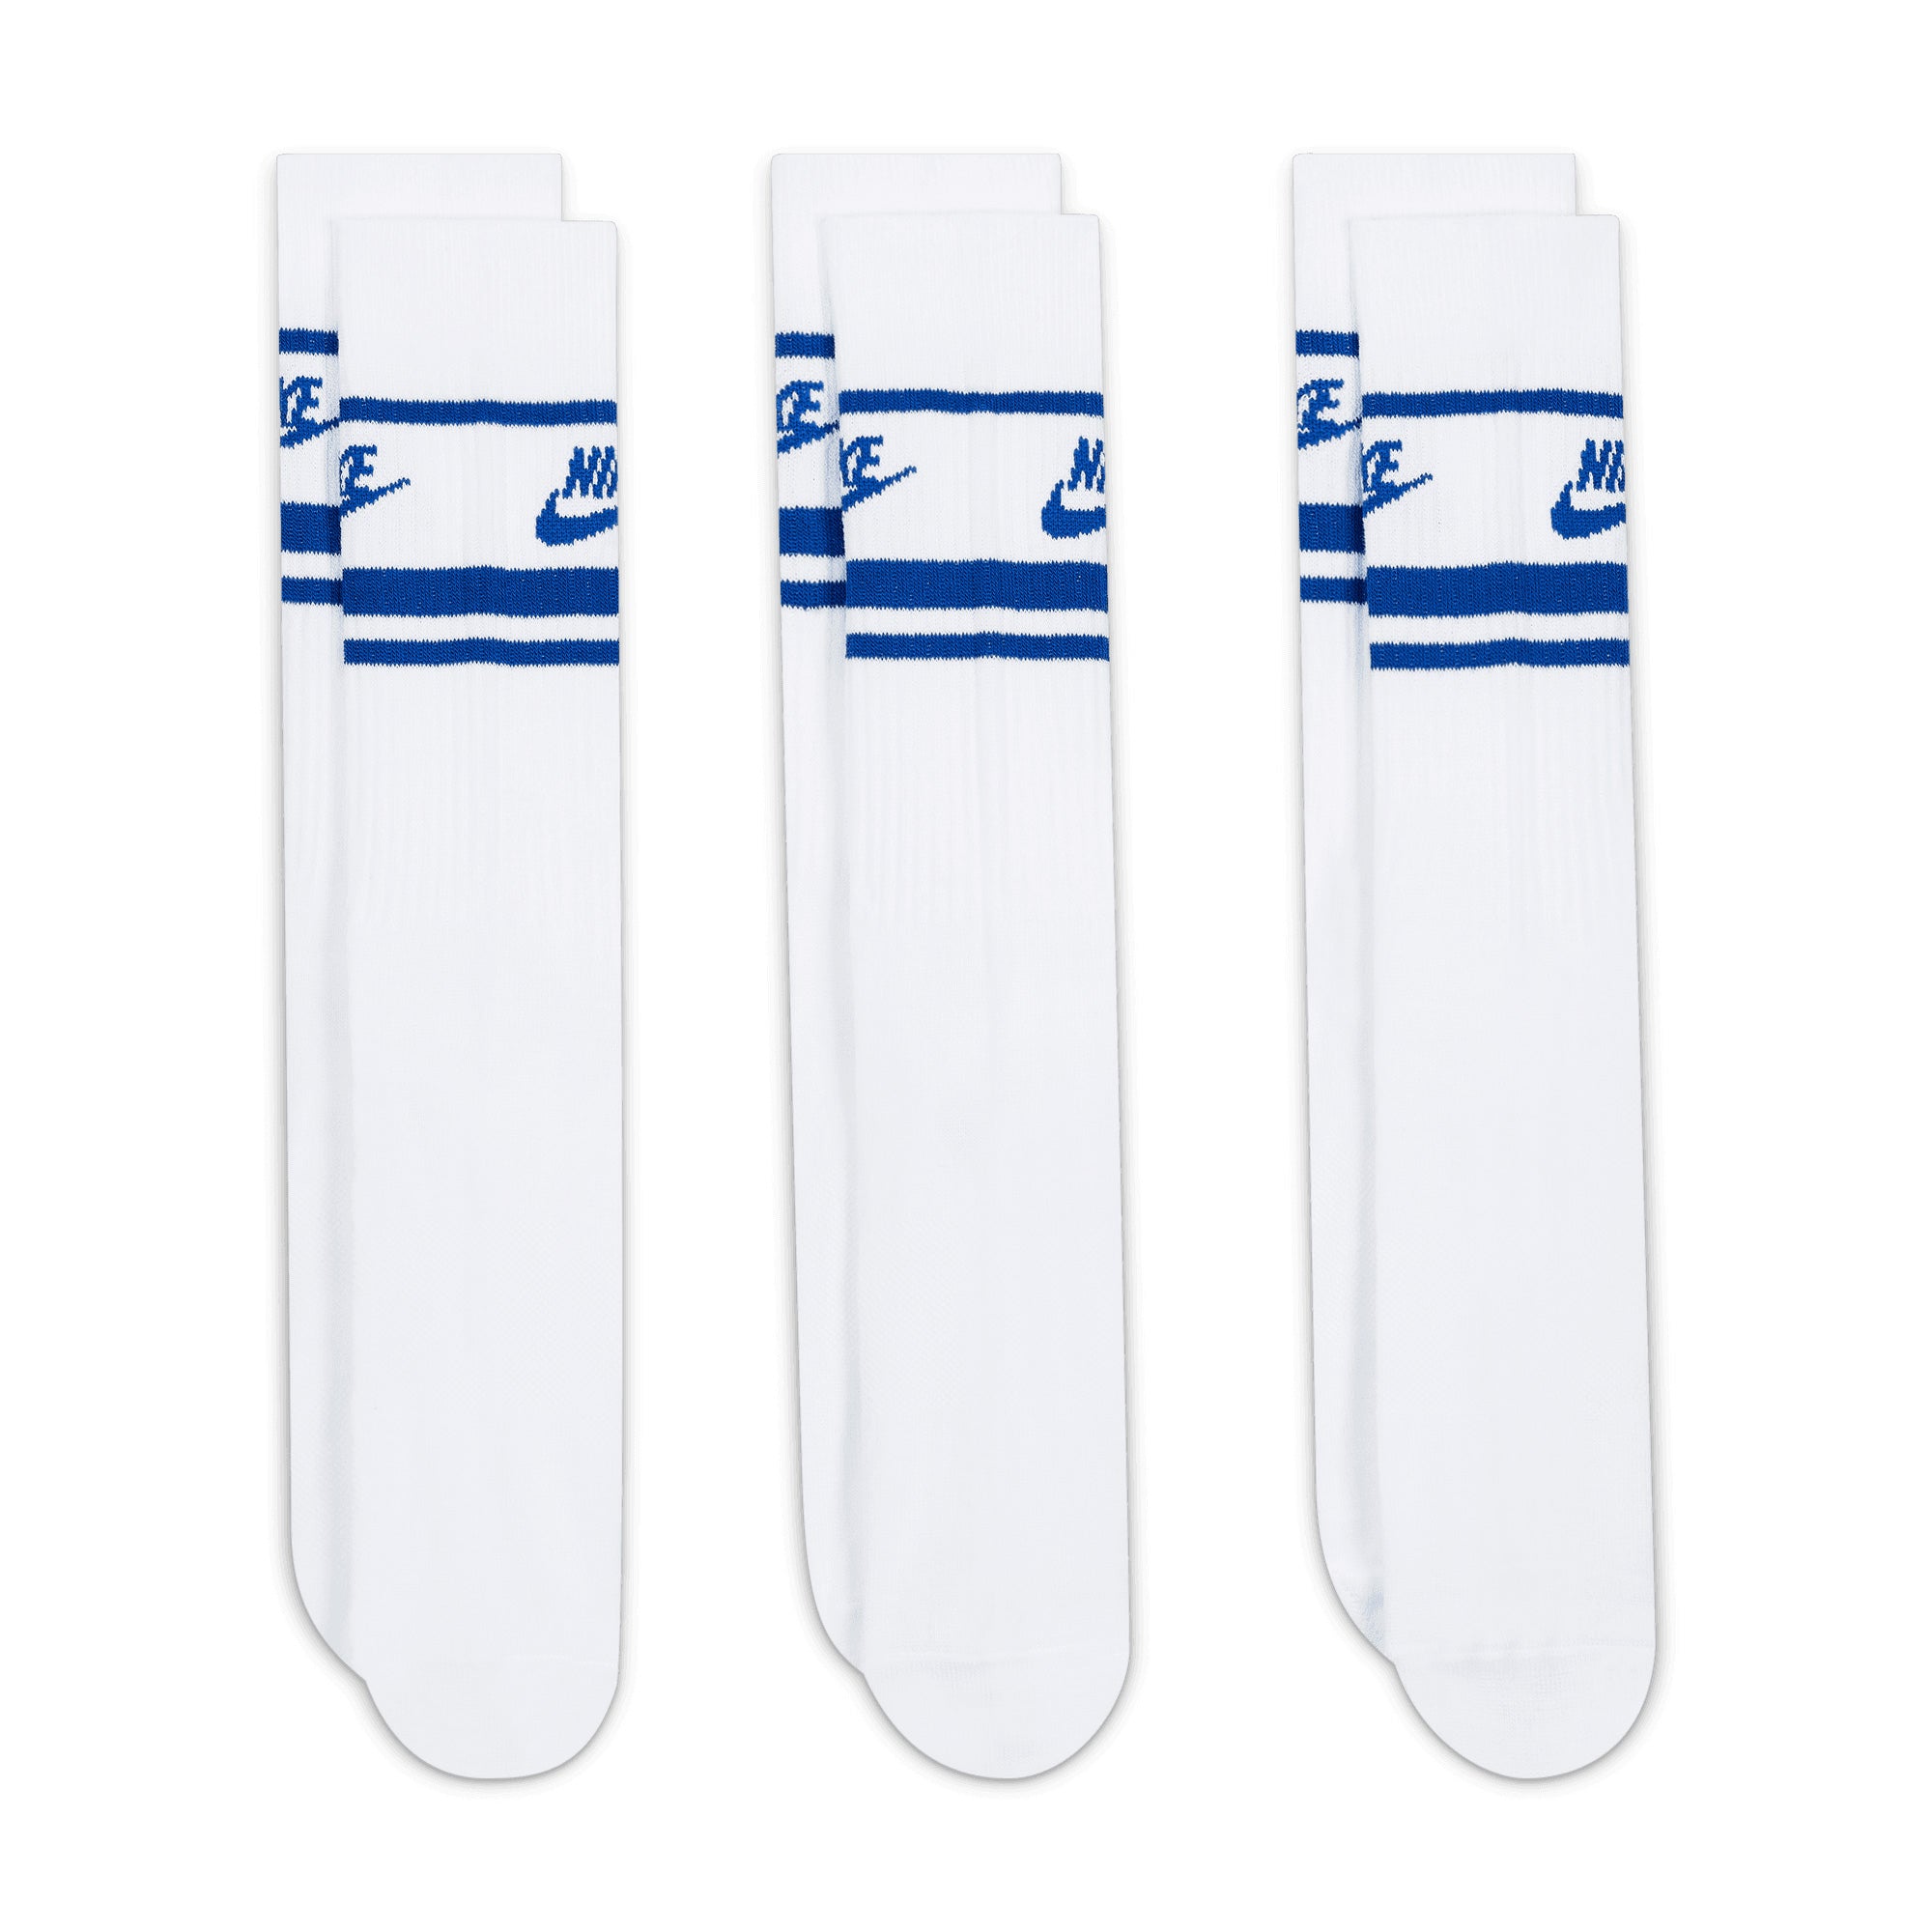 Nike SB Everyday Striped Essential Crew 3 pack Socks - White/Game Royal